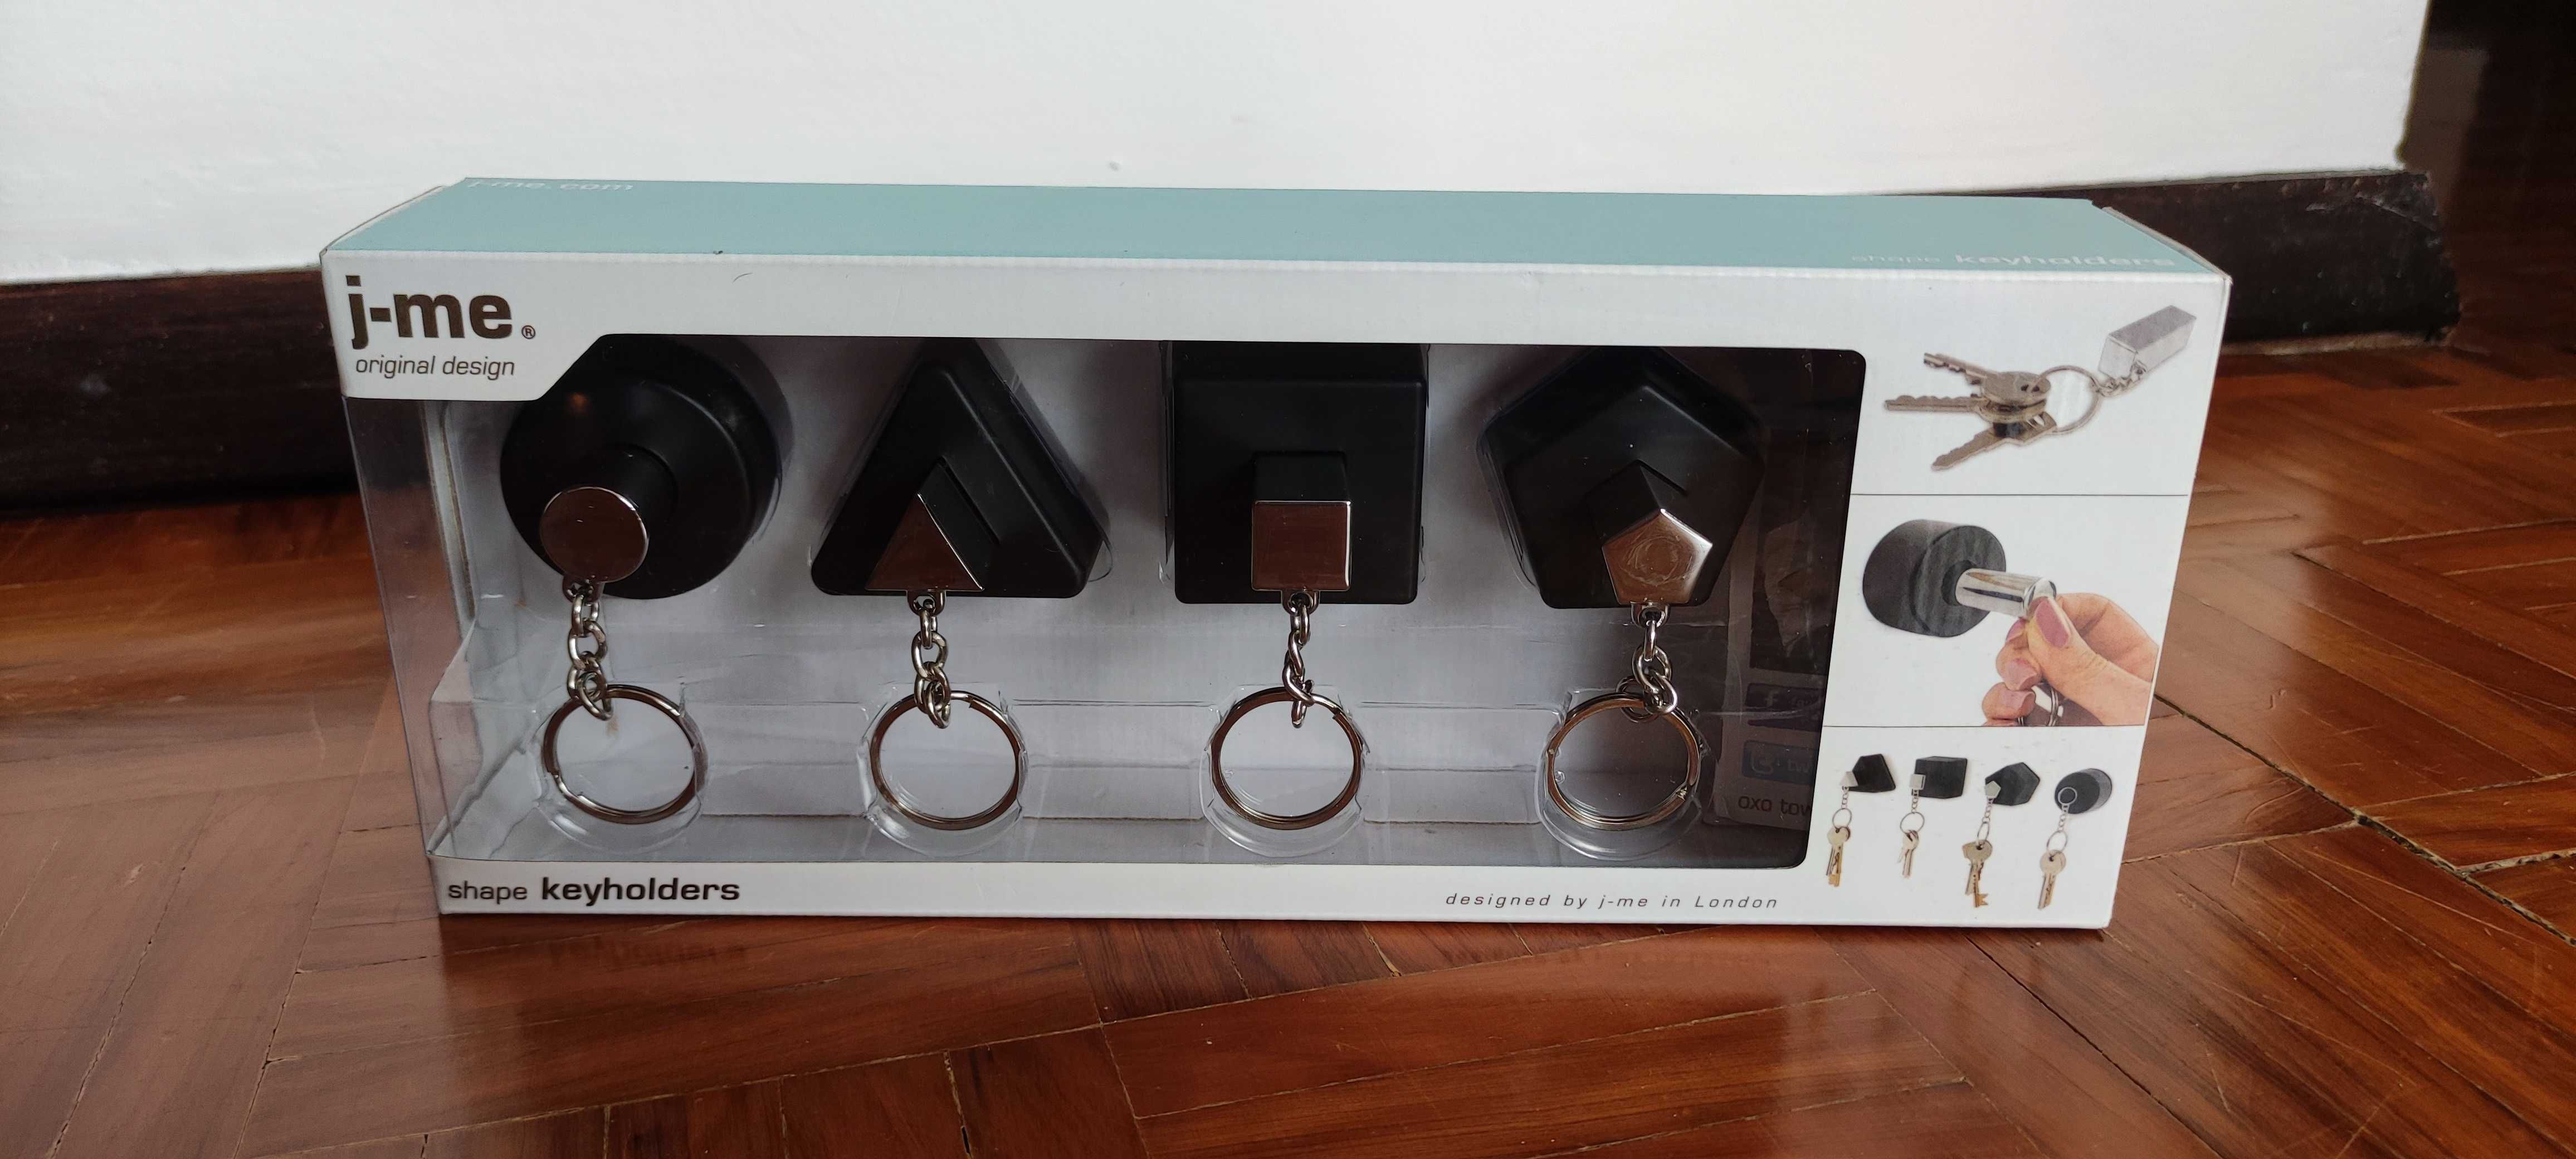 Kit porta-chaves magnético com formas geométricas